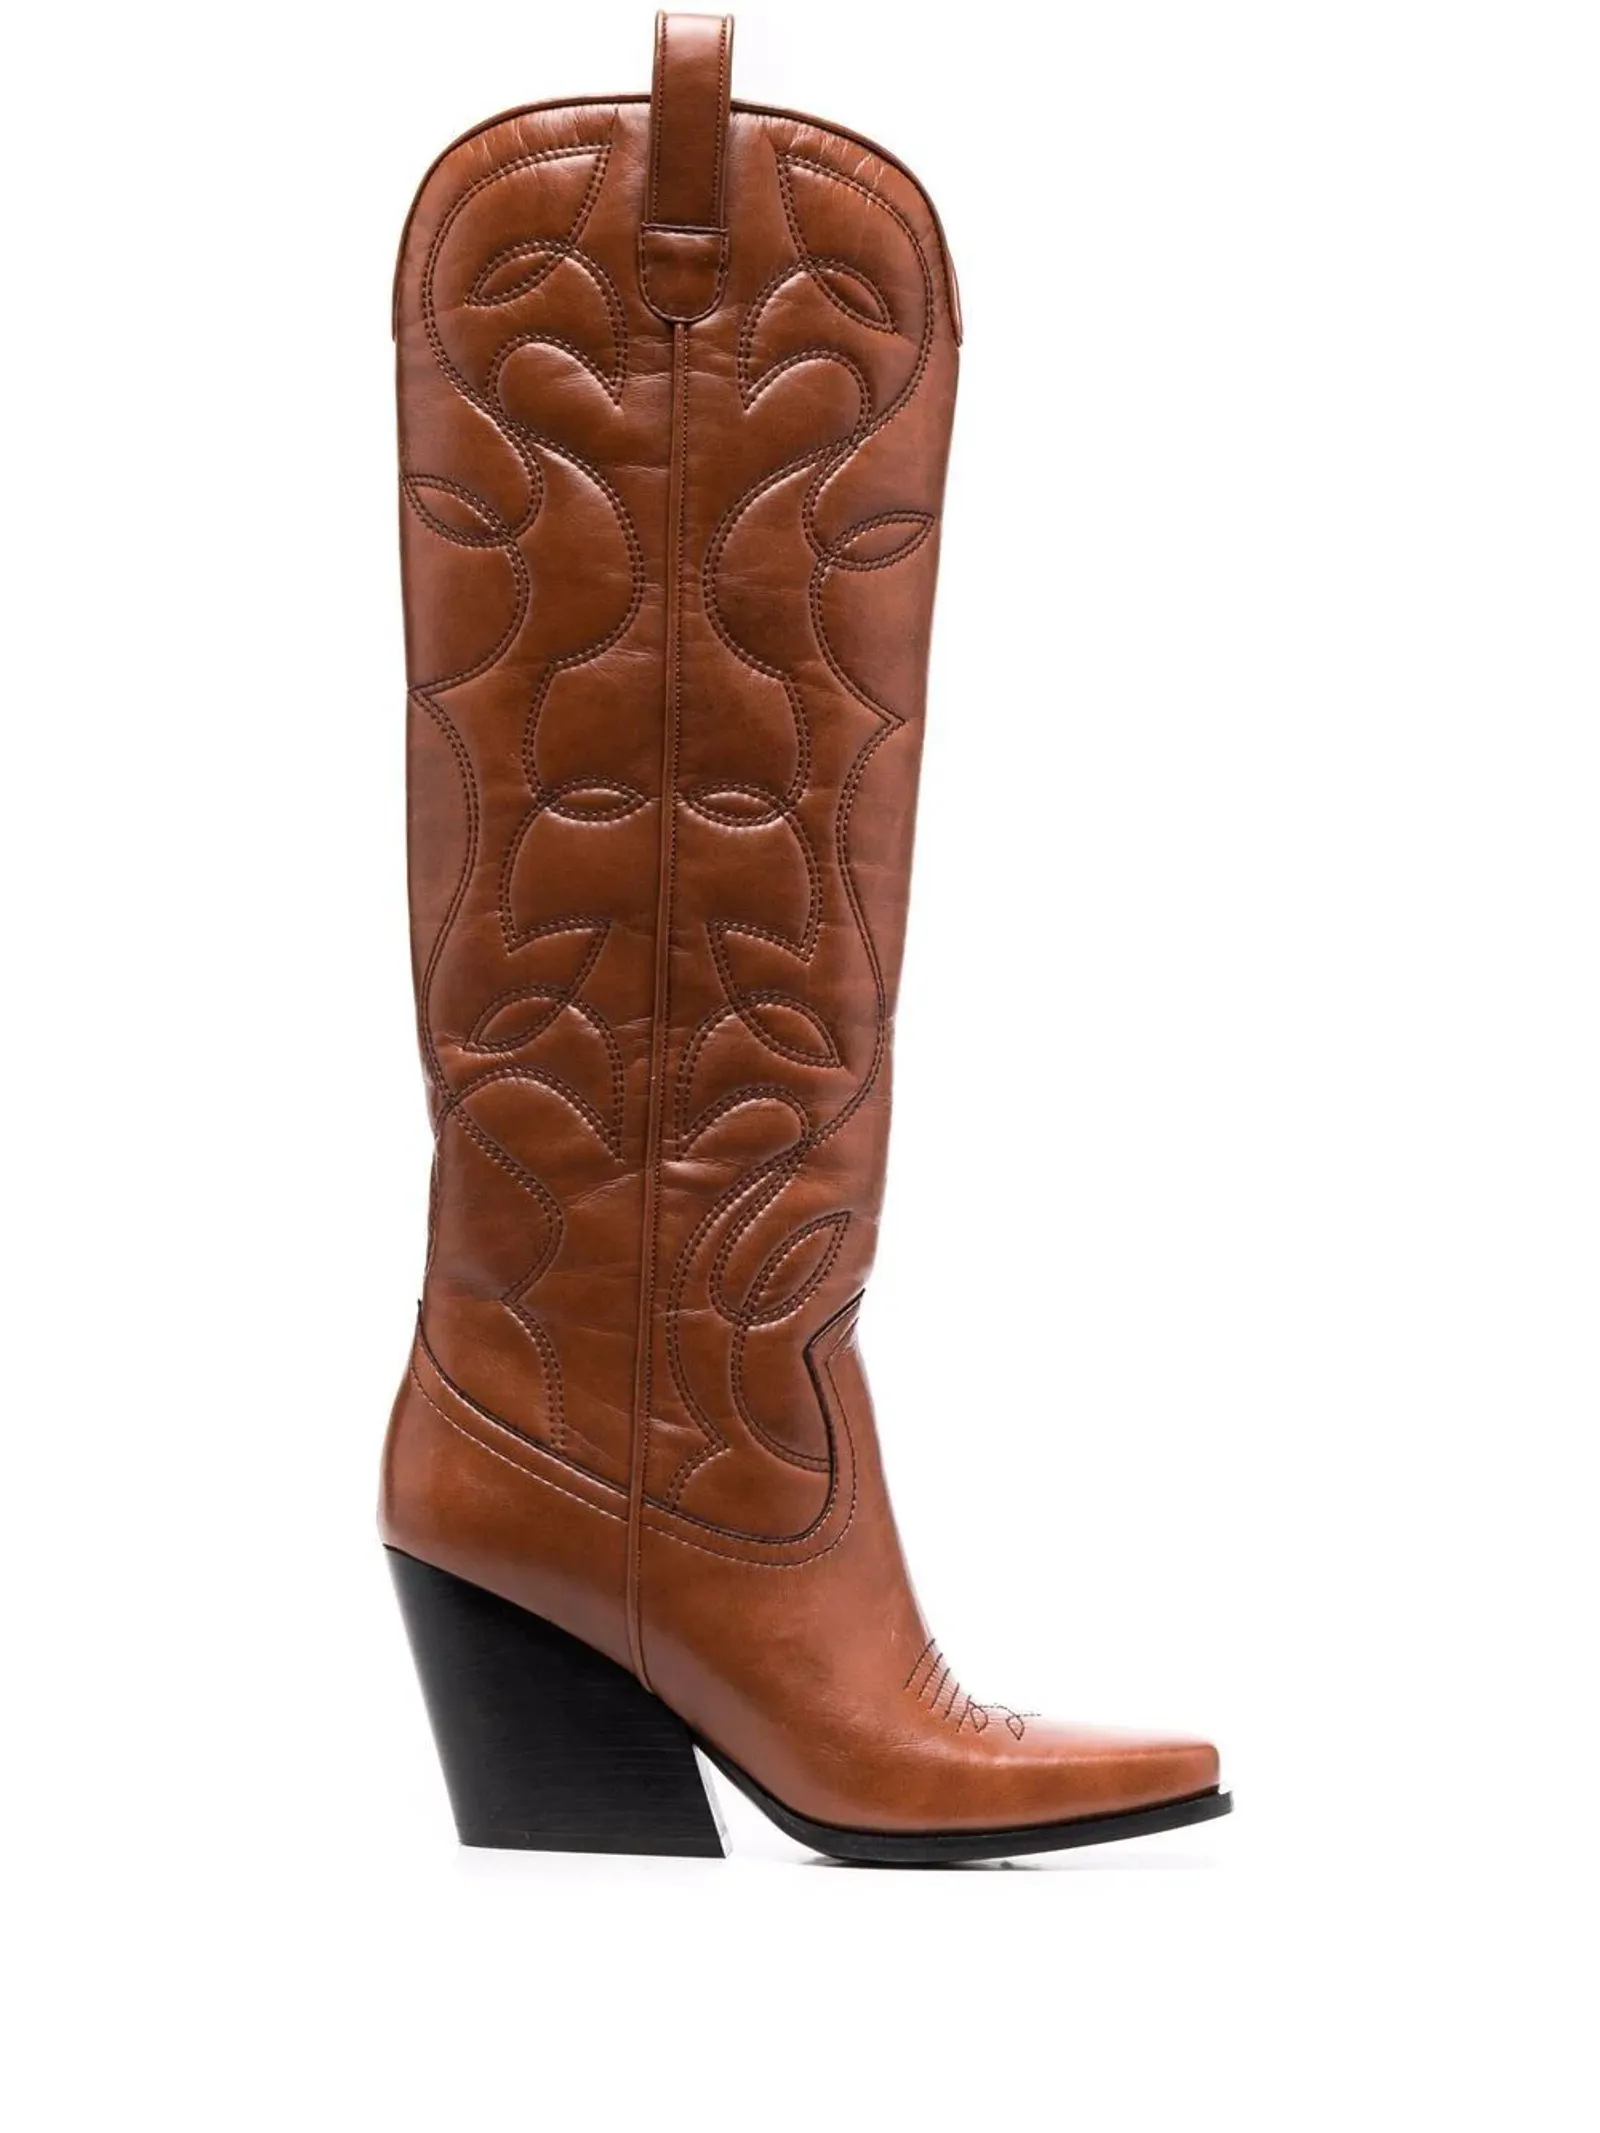 #PopbelaOOTD: Rekomendasi Cowboy Boots untuk Perempuan